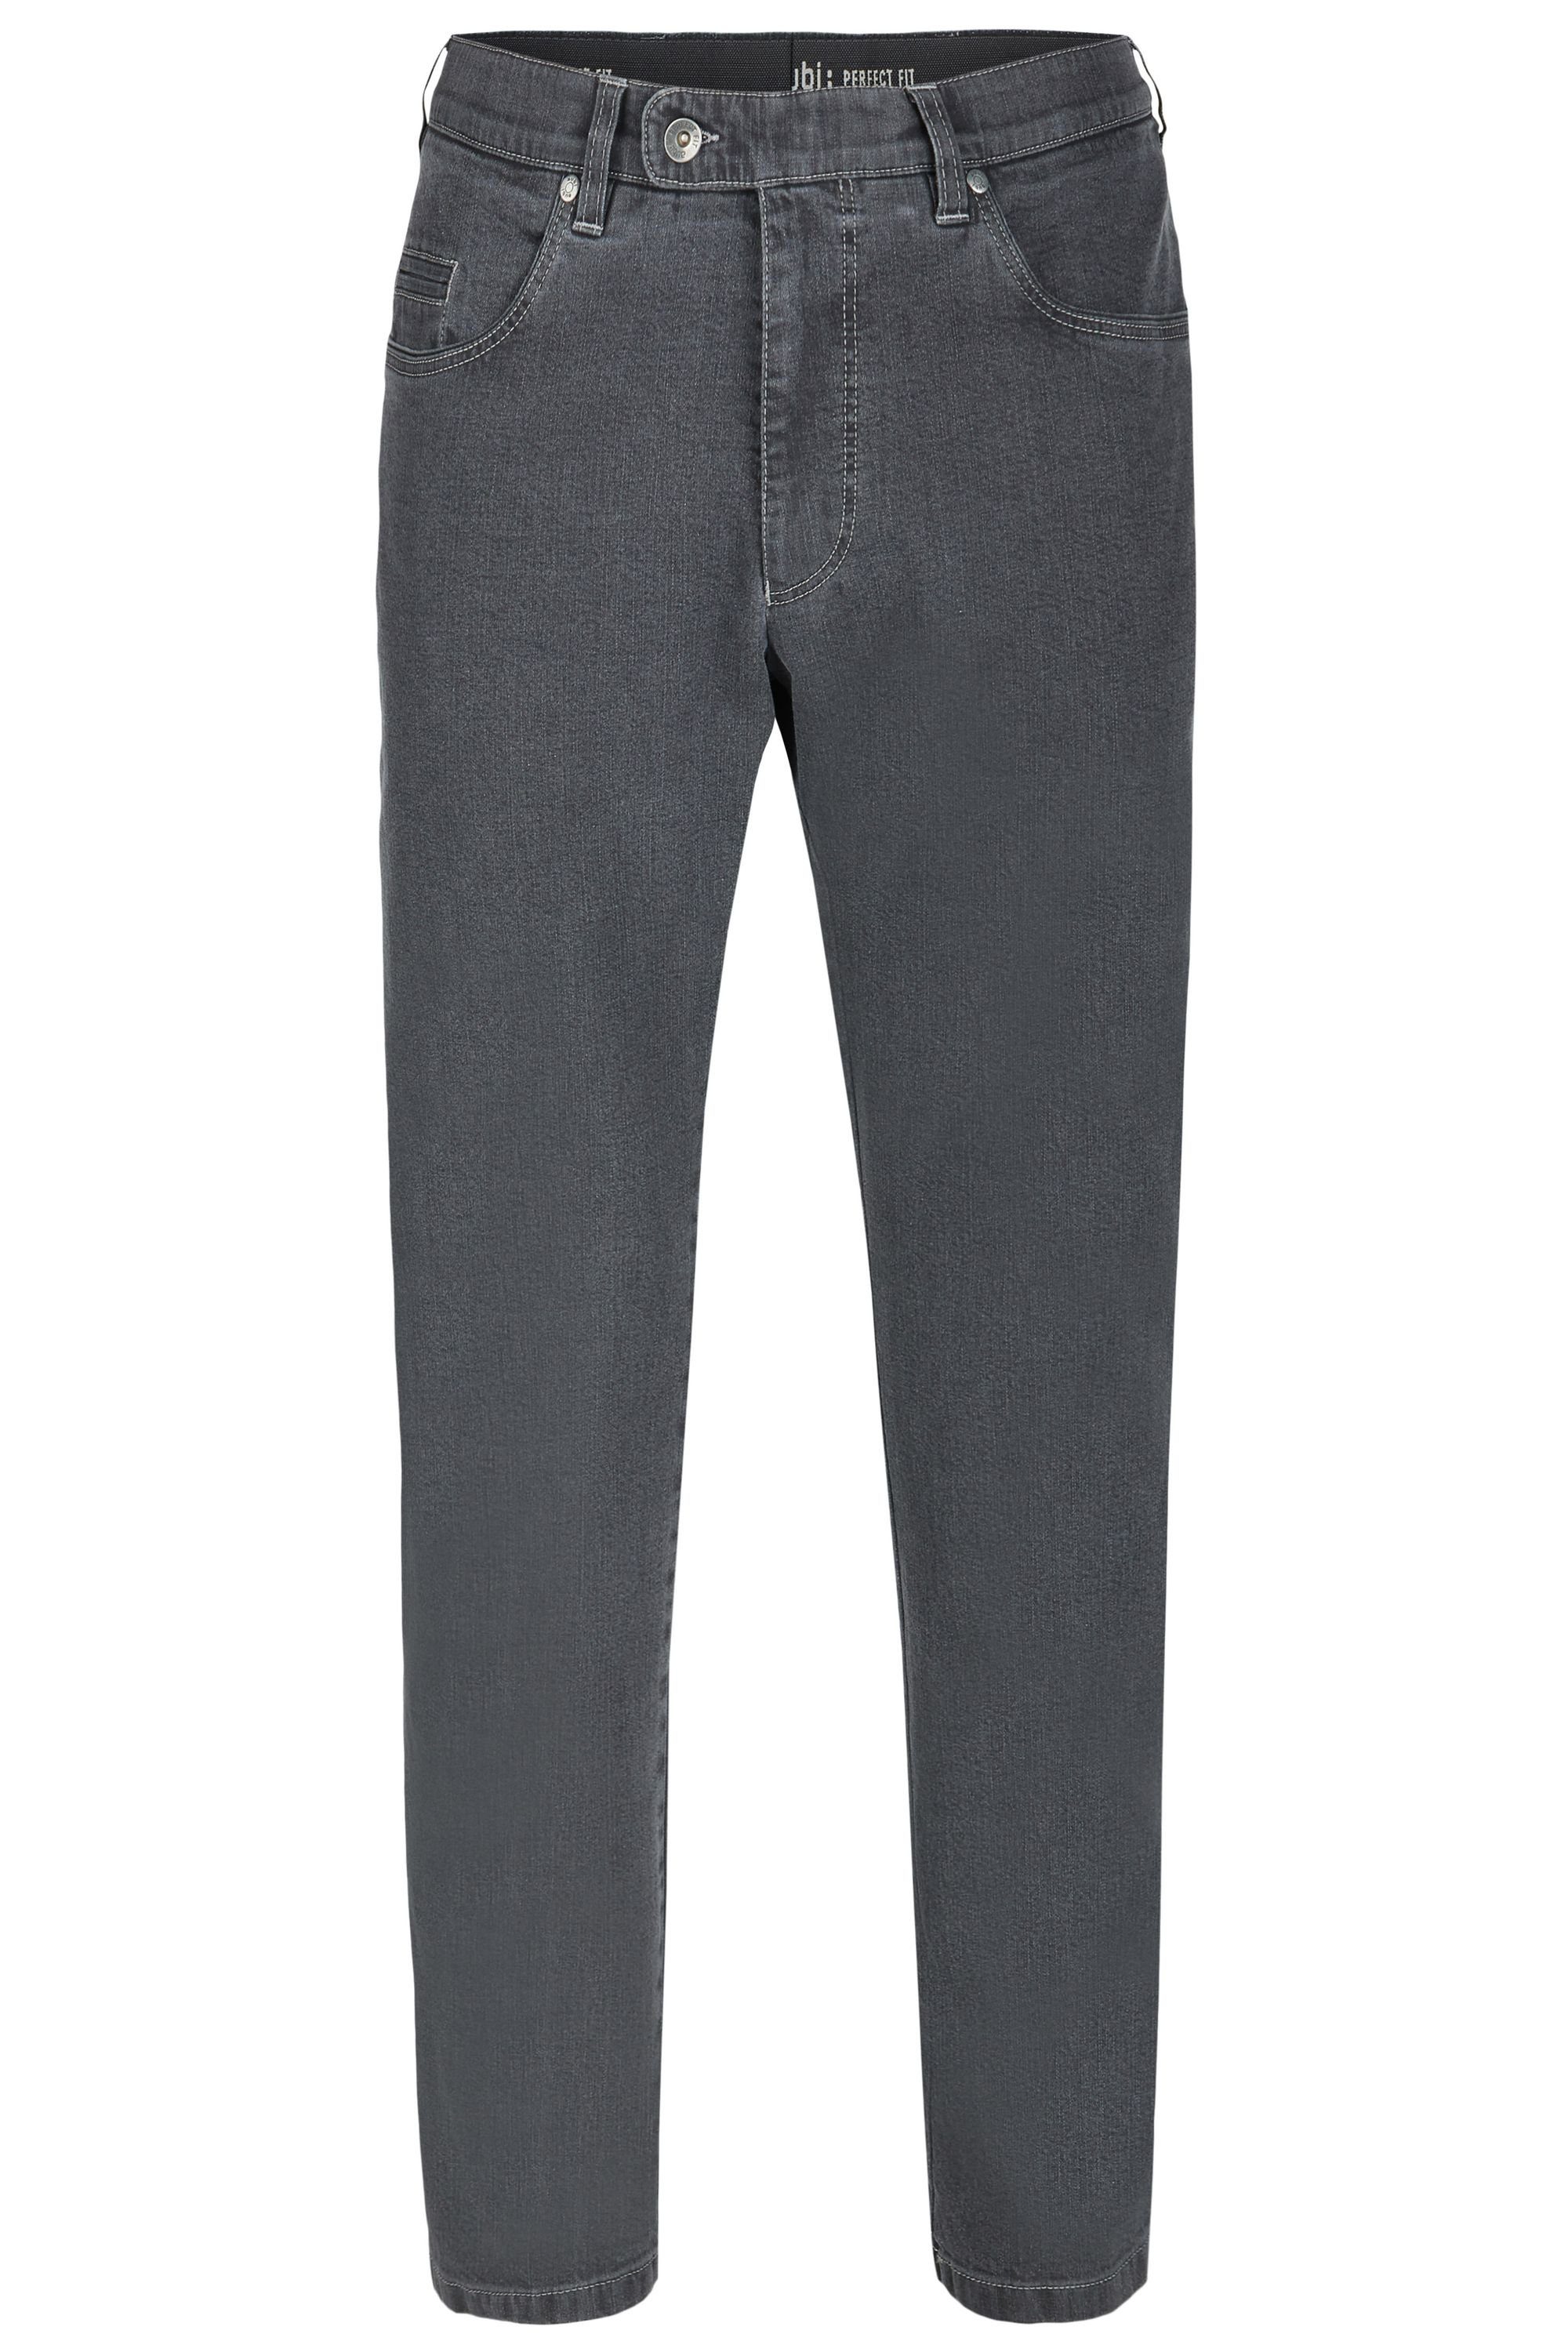 aubi: Bequeme Jeans aubi Perfect Fit Herren Jeans Hose Stretch Modell 577 grey (53) | Jeans